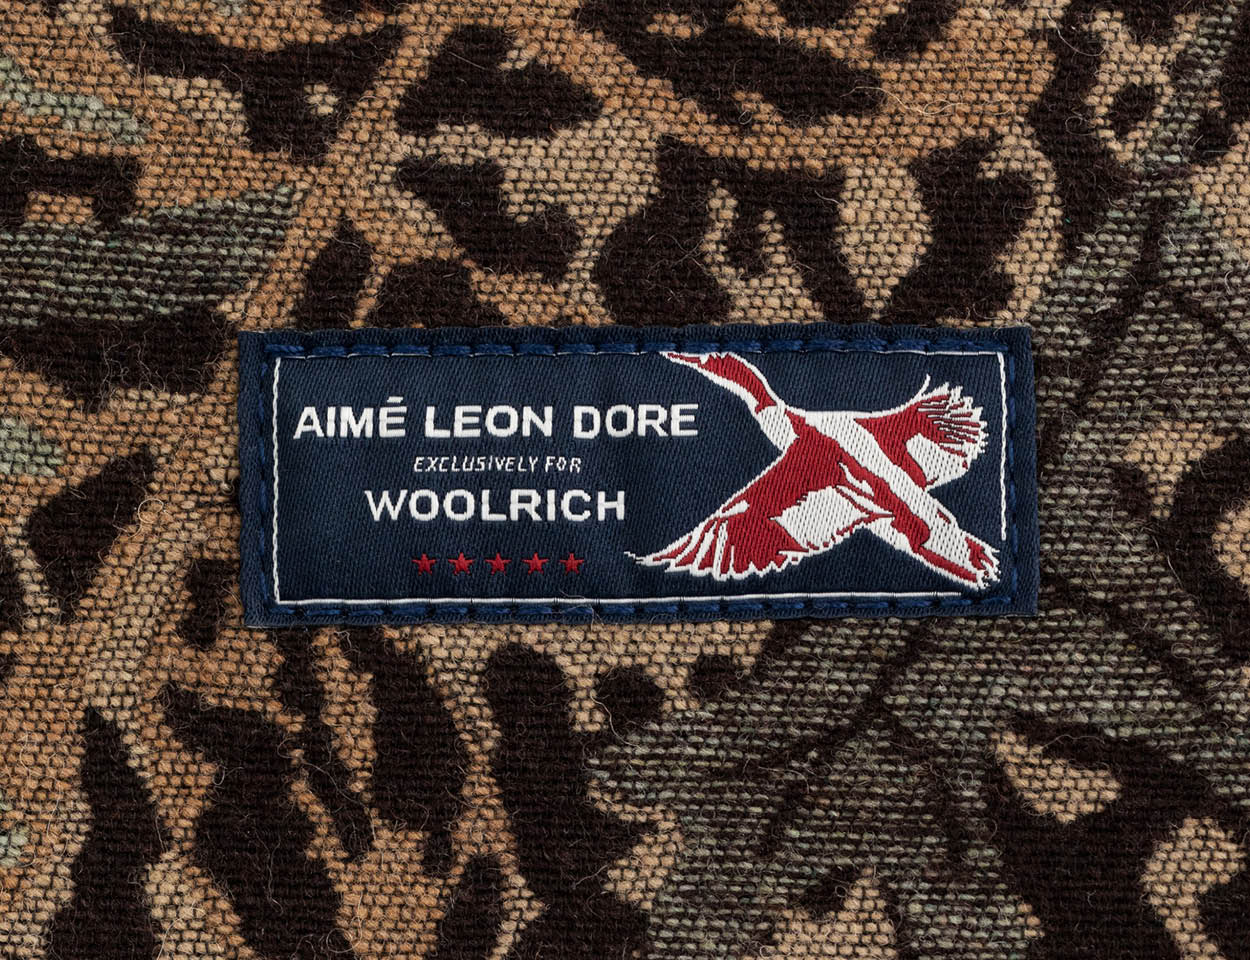 Aimé Leon Dore / Woolrich - Limited Edition